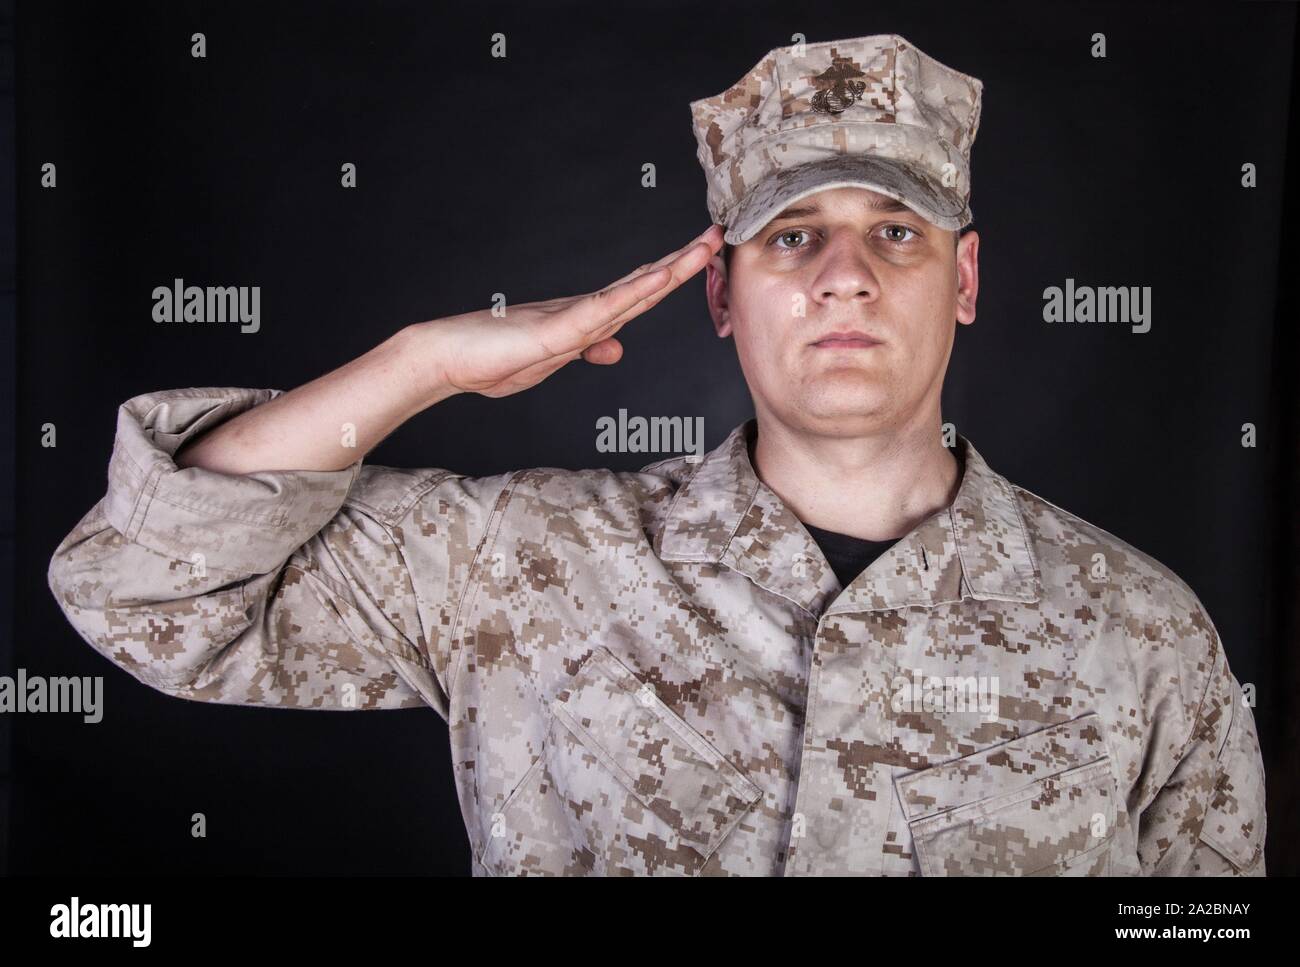 Shoulder portrait of saluting United States Marine Corps infantry